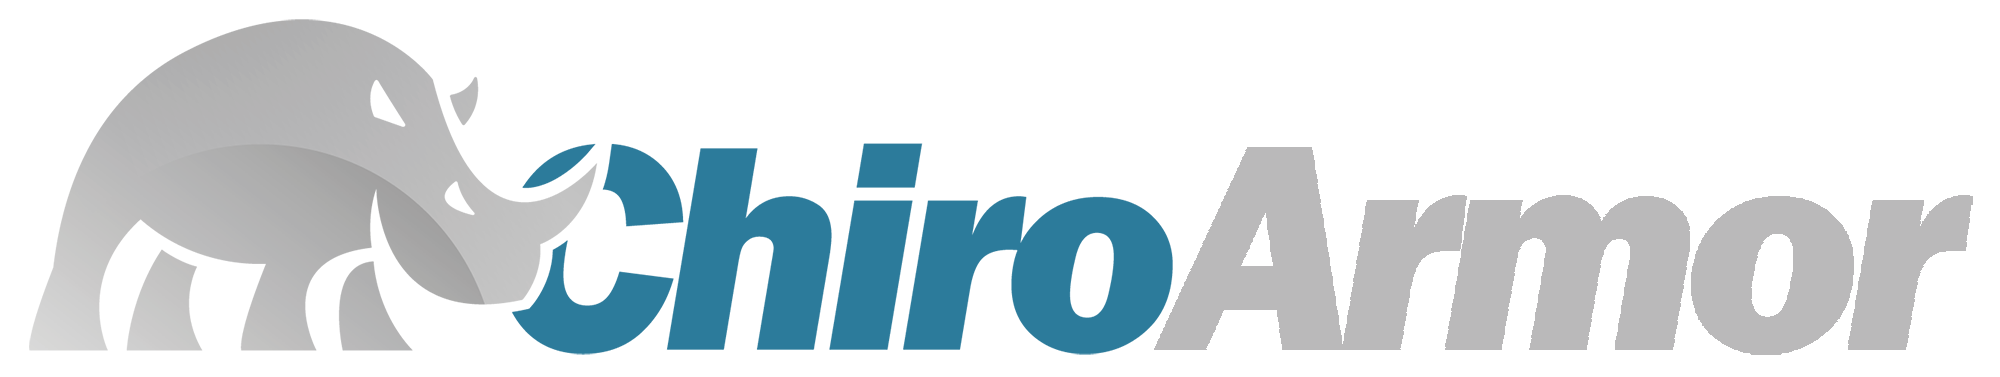 image of ChiroArmor